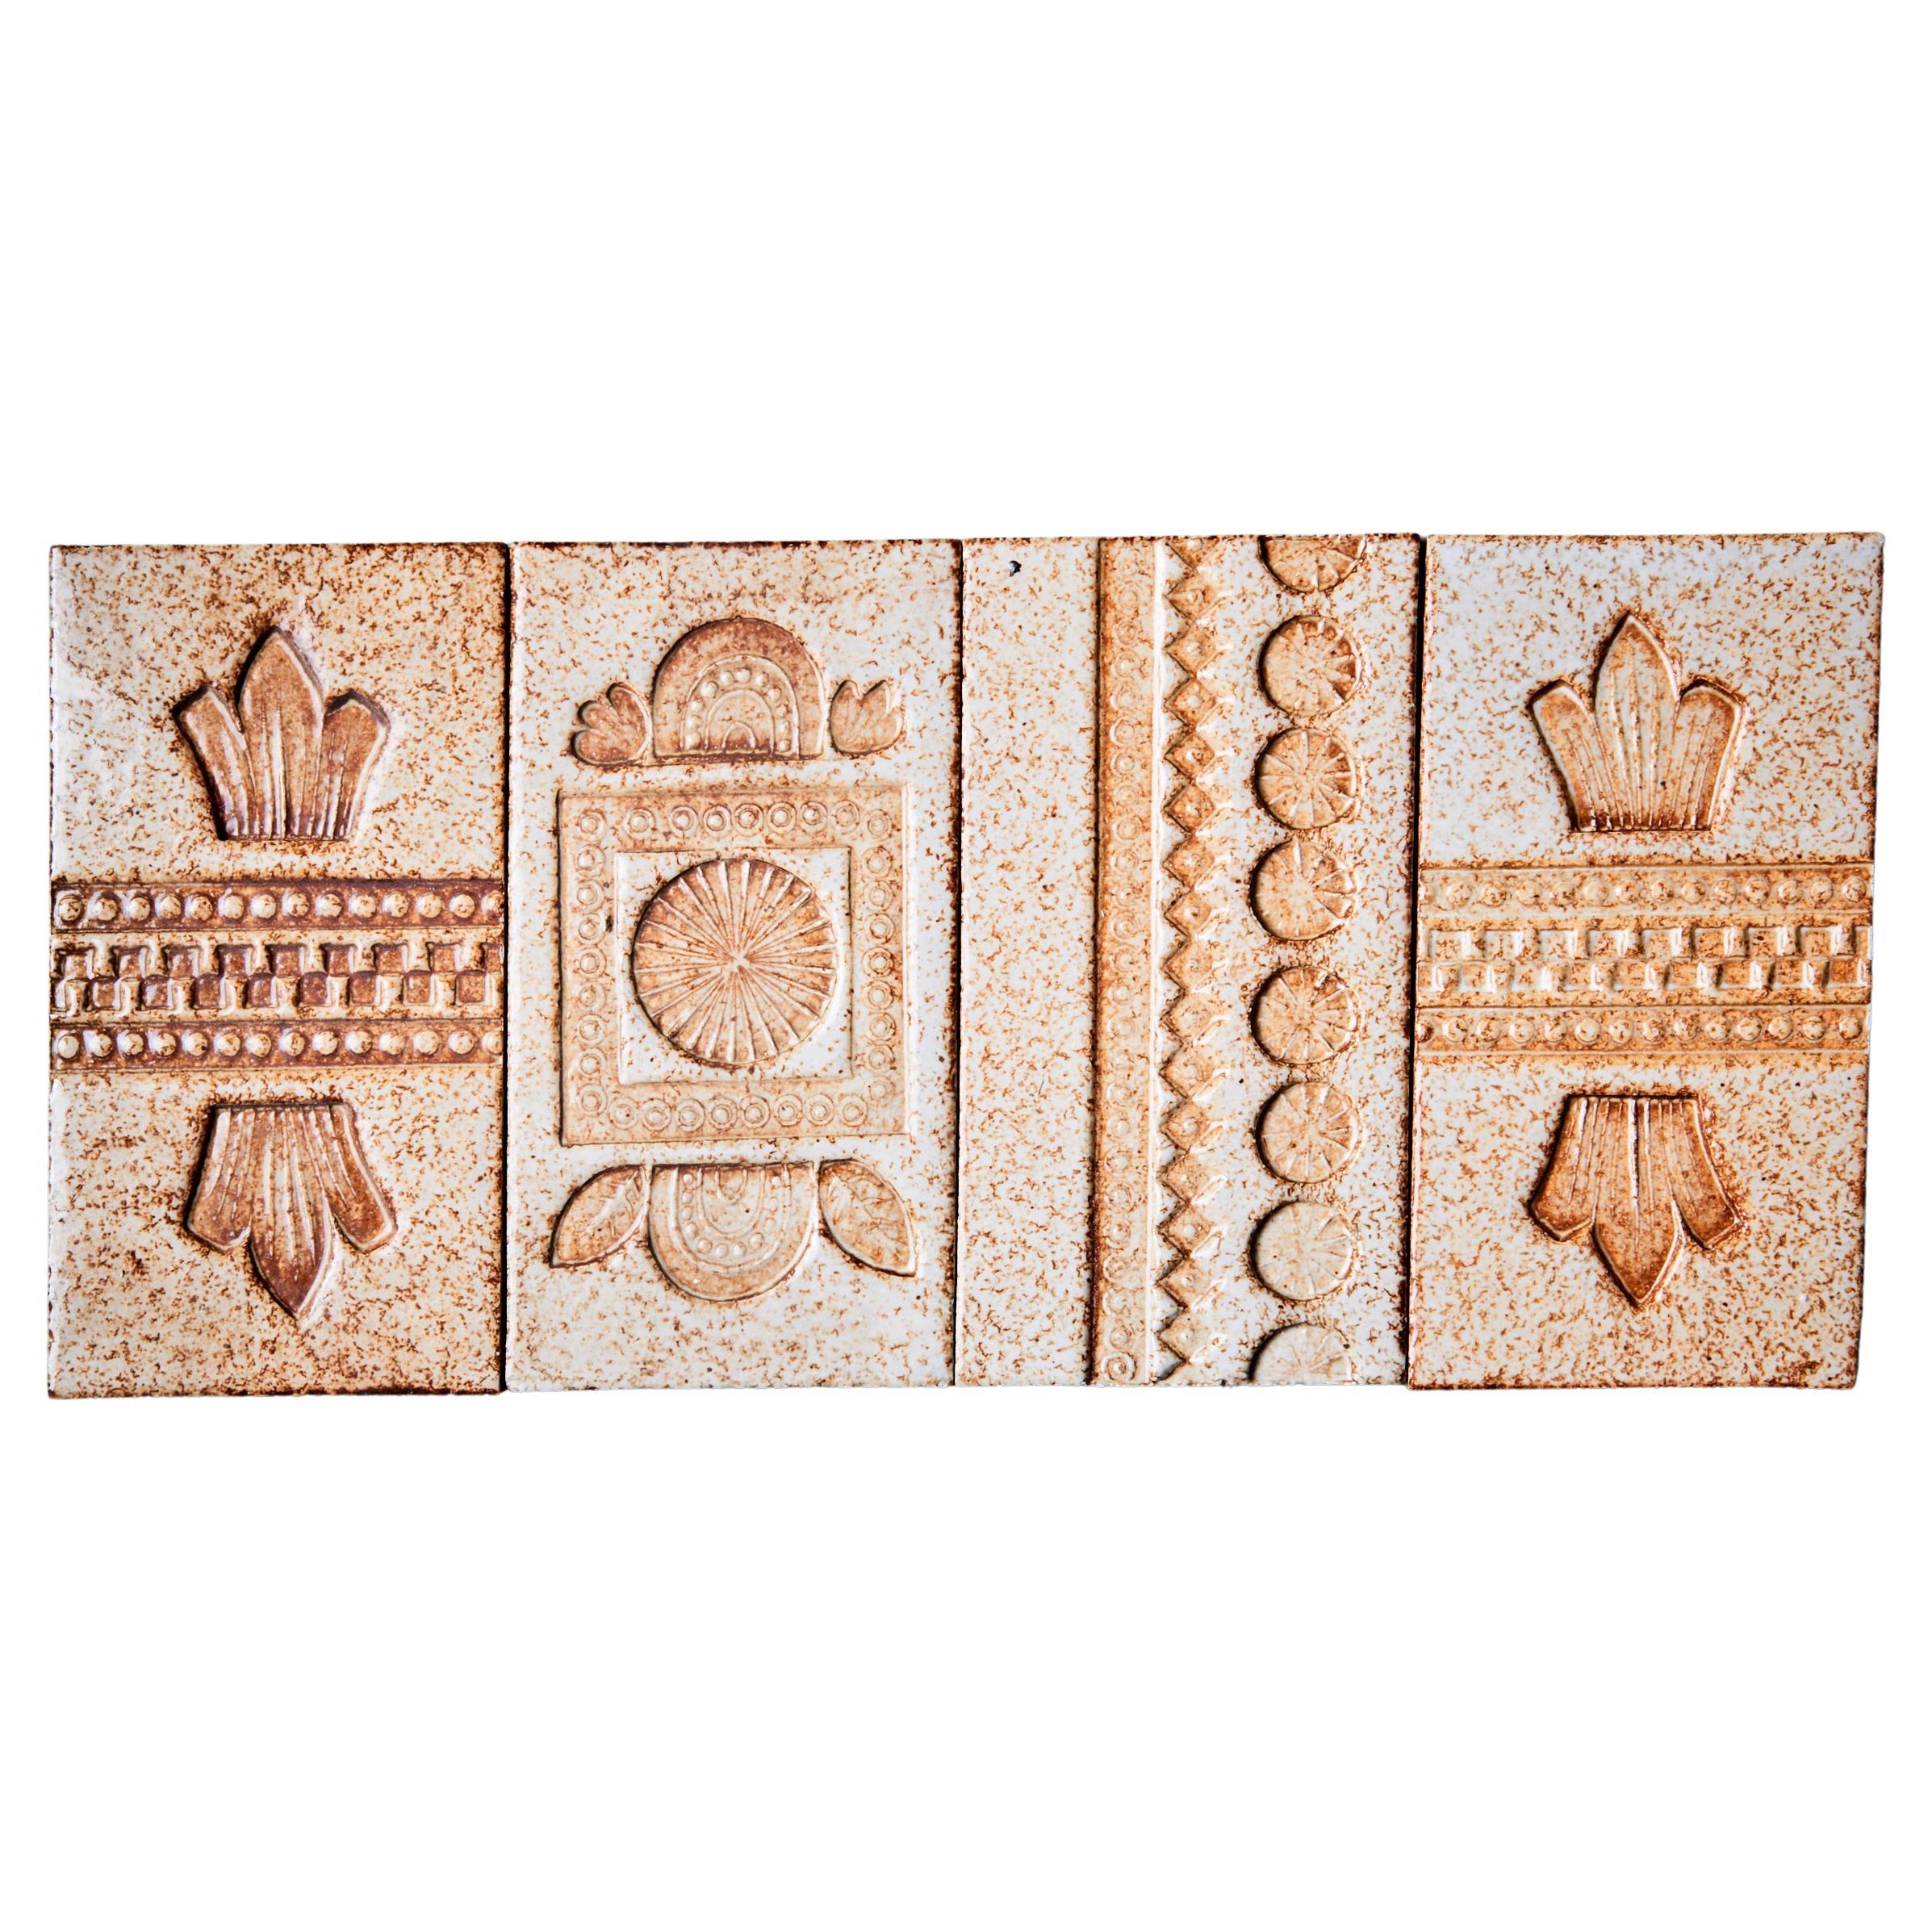 Set of 5 ceramic tiles by Roger Capron, France - 1970s 